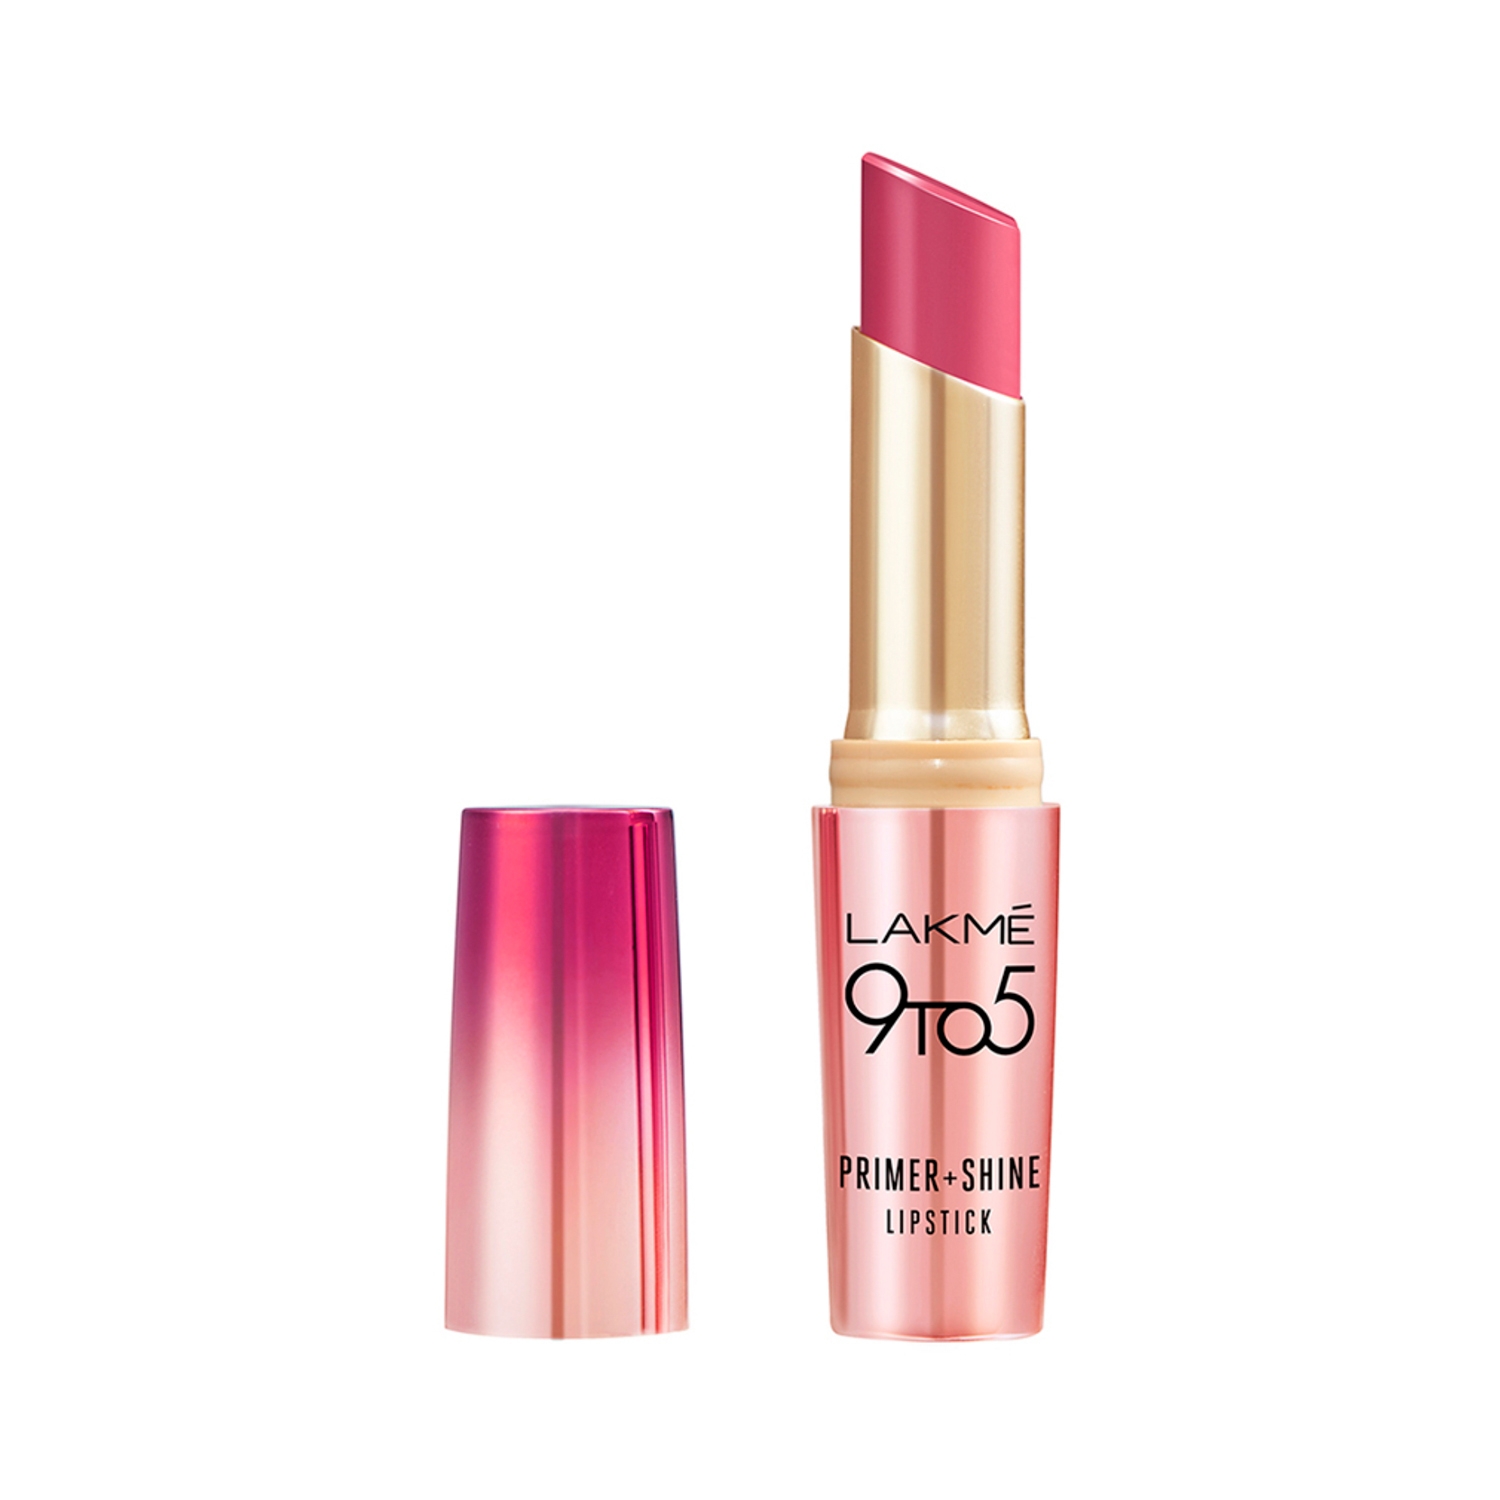 Lakme 9 To 5 Primer + Shine Lipstick - Pink Dream (3.6g)